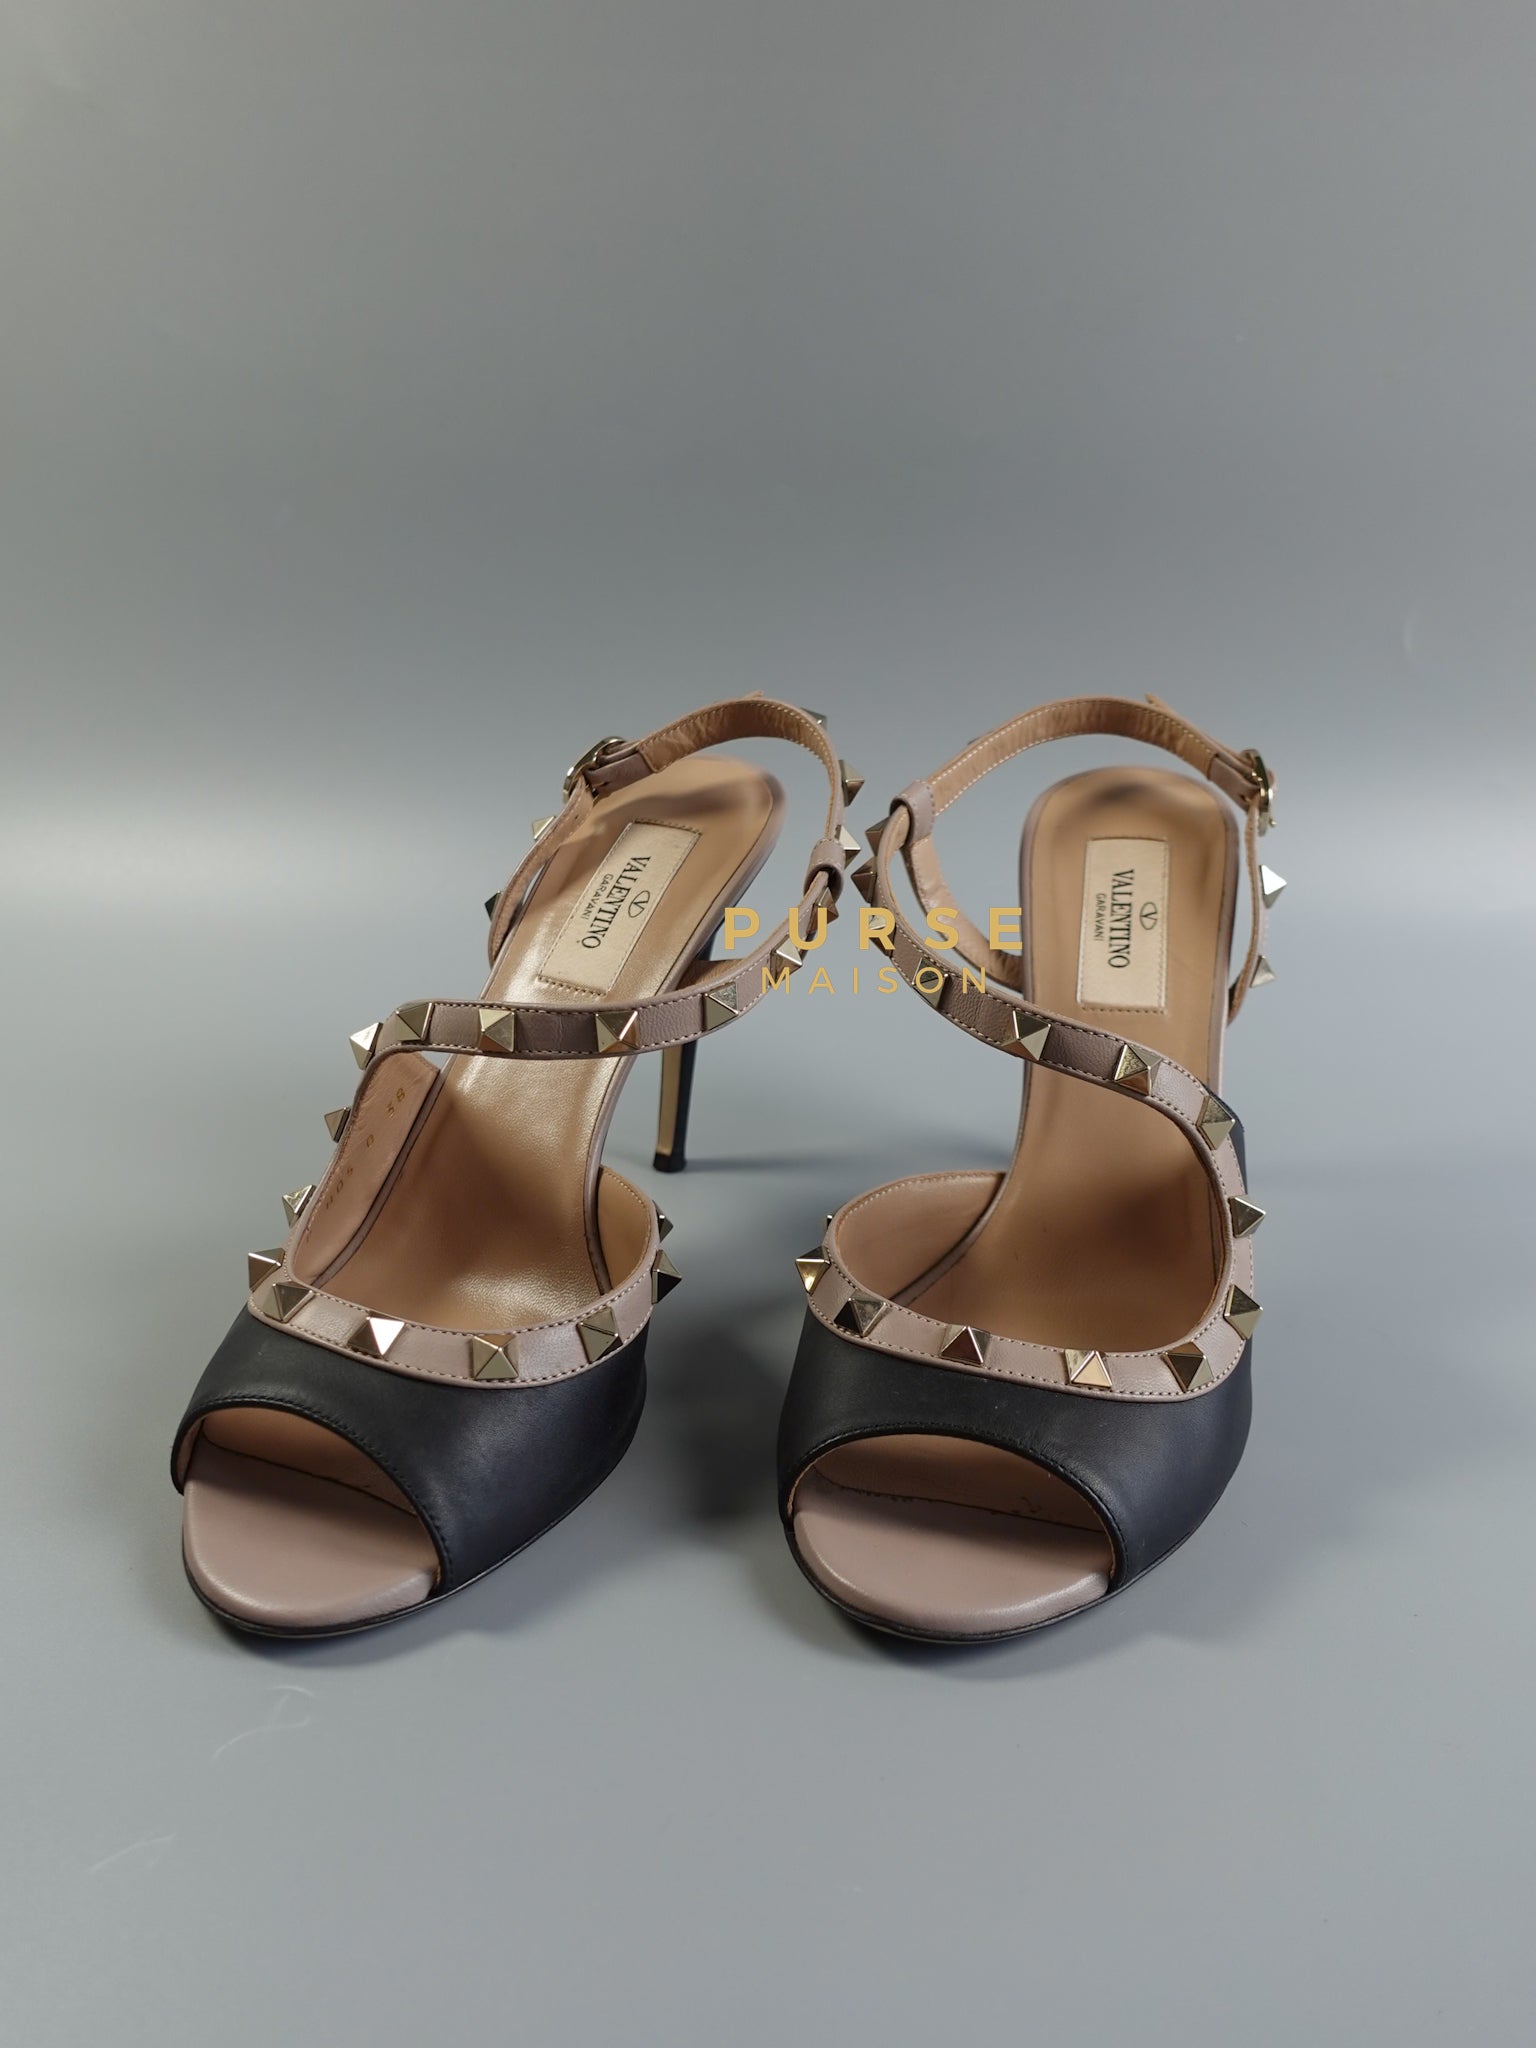 Rockstud Peep-toe Cross Straps High Heels Sandals (Black/Nude) Size 38 EU (25.5cm) | Purse Maison Luxury Bags Shop